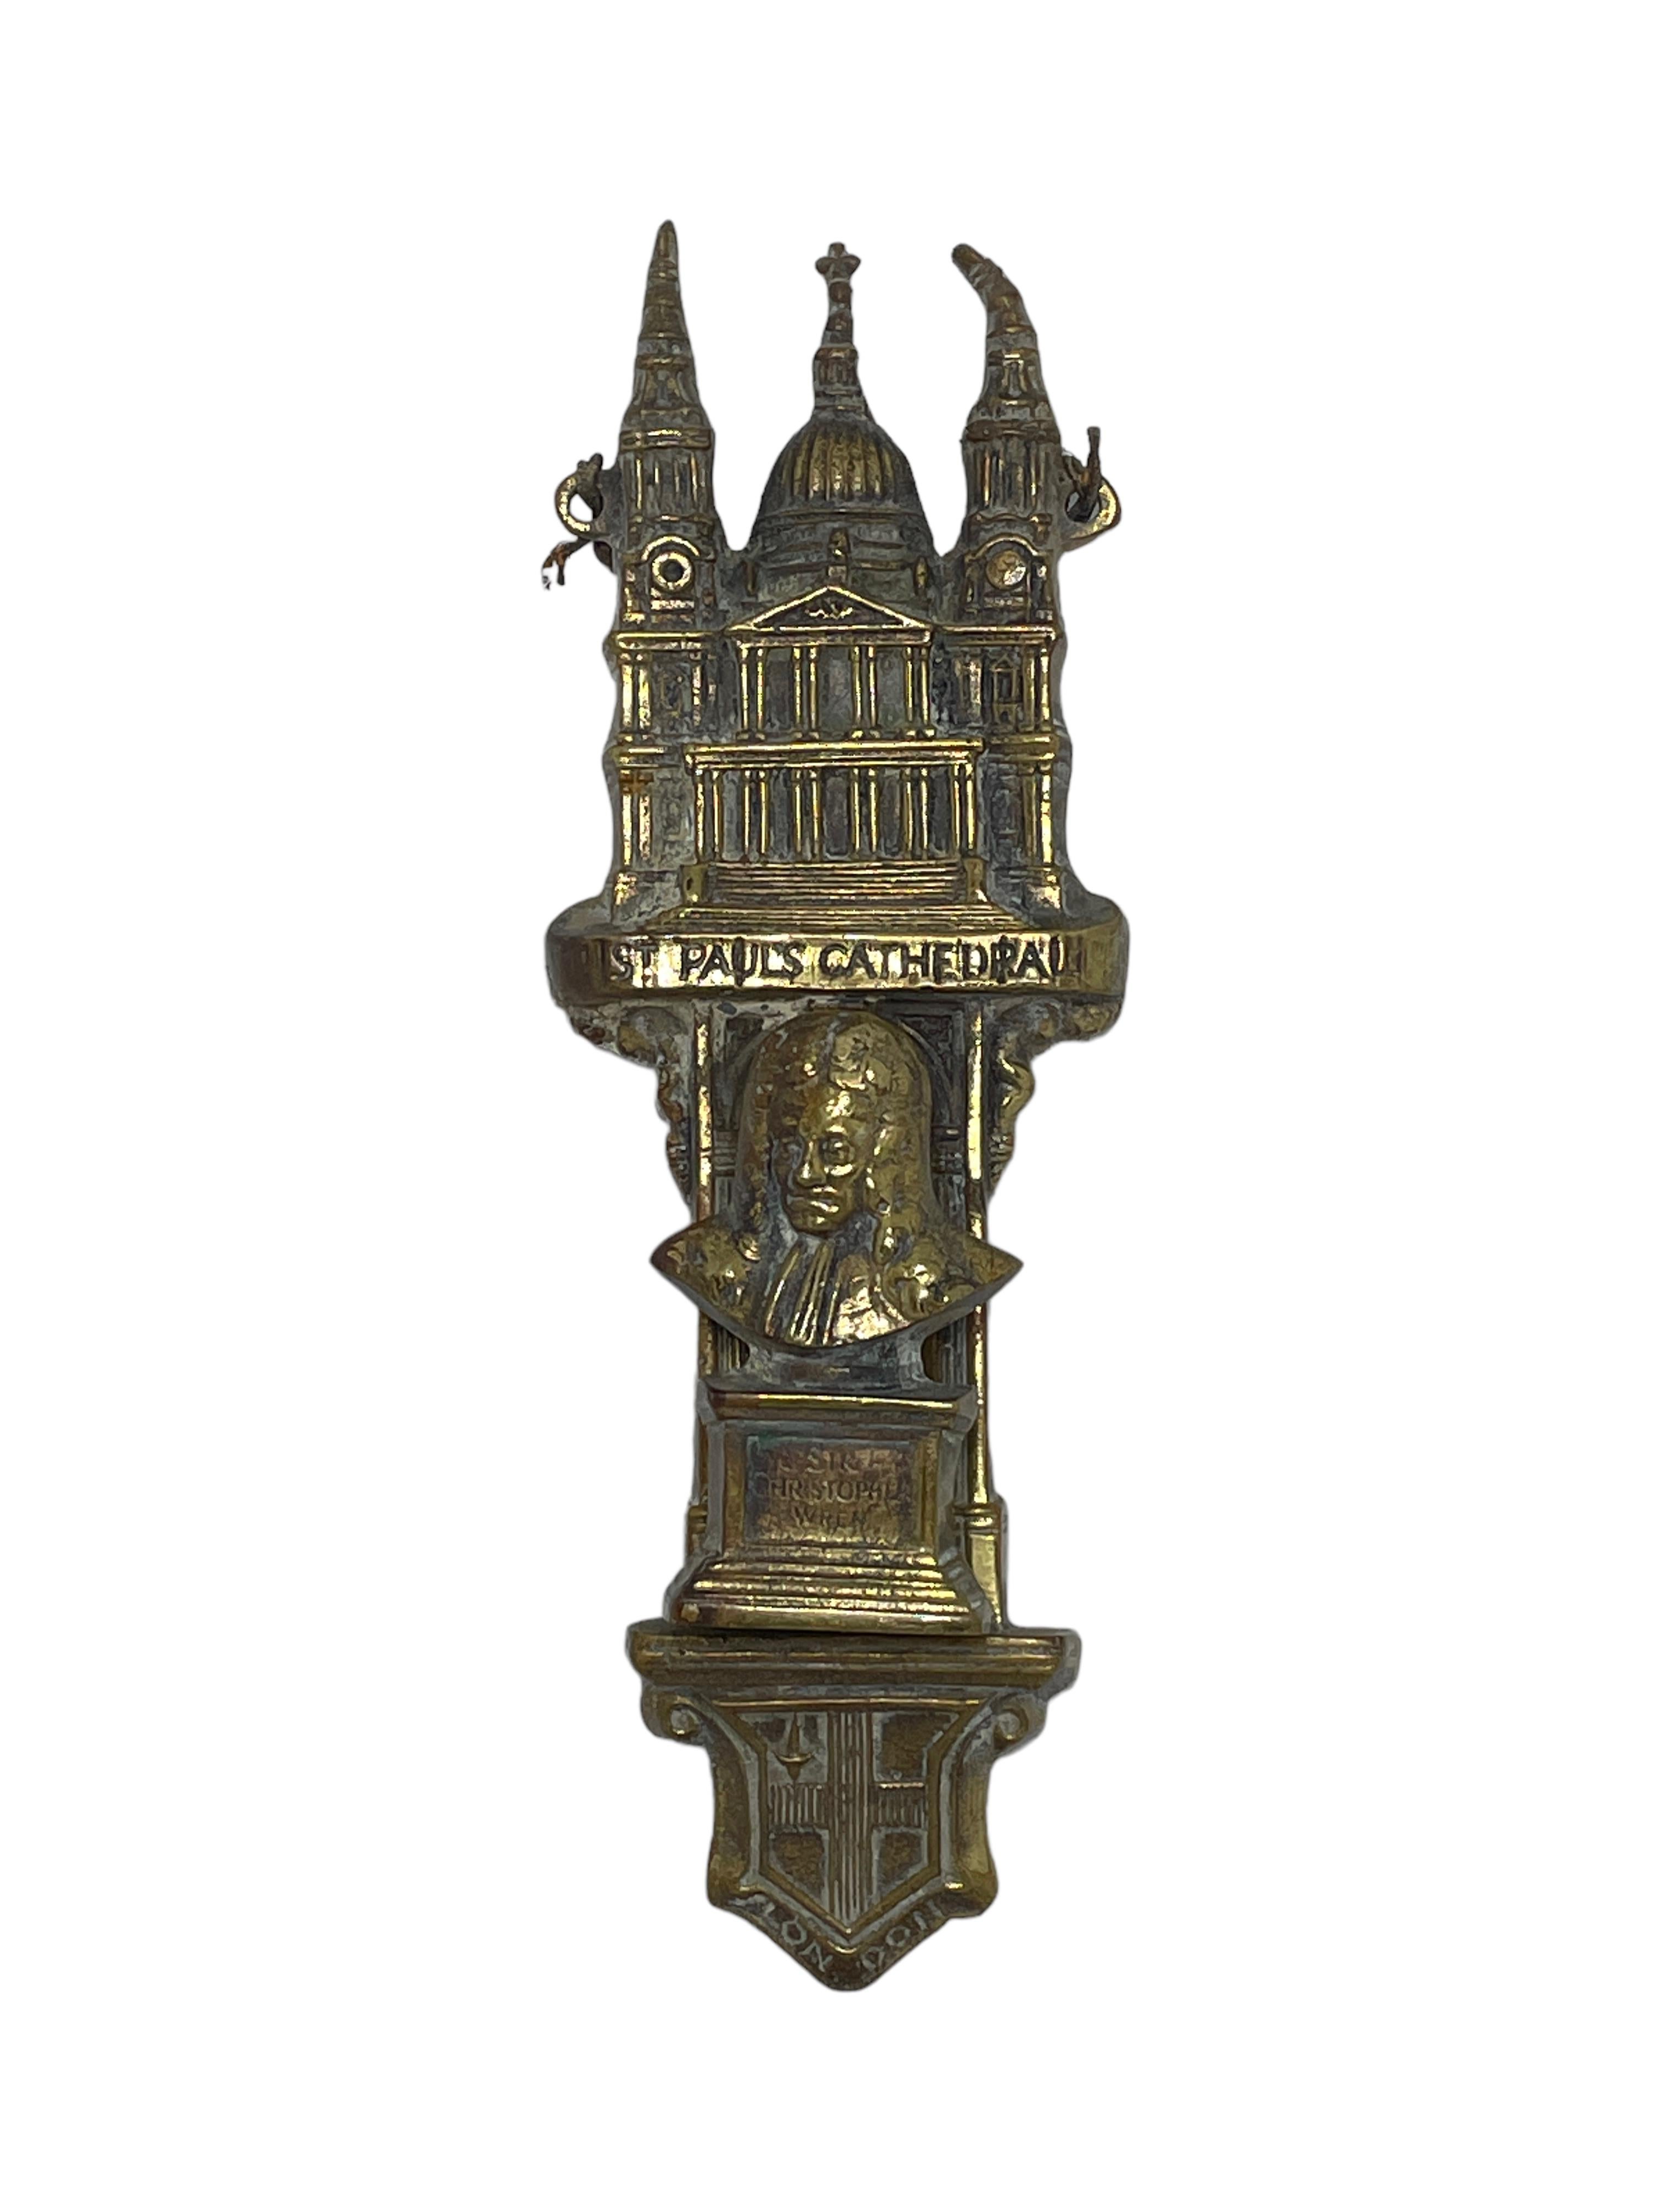 Beautiful St. Pauls Cathedral Door Knocker, Brass or Bronze, England vintage